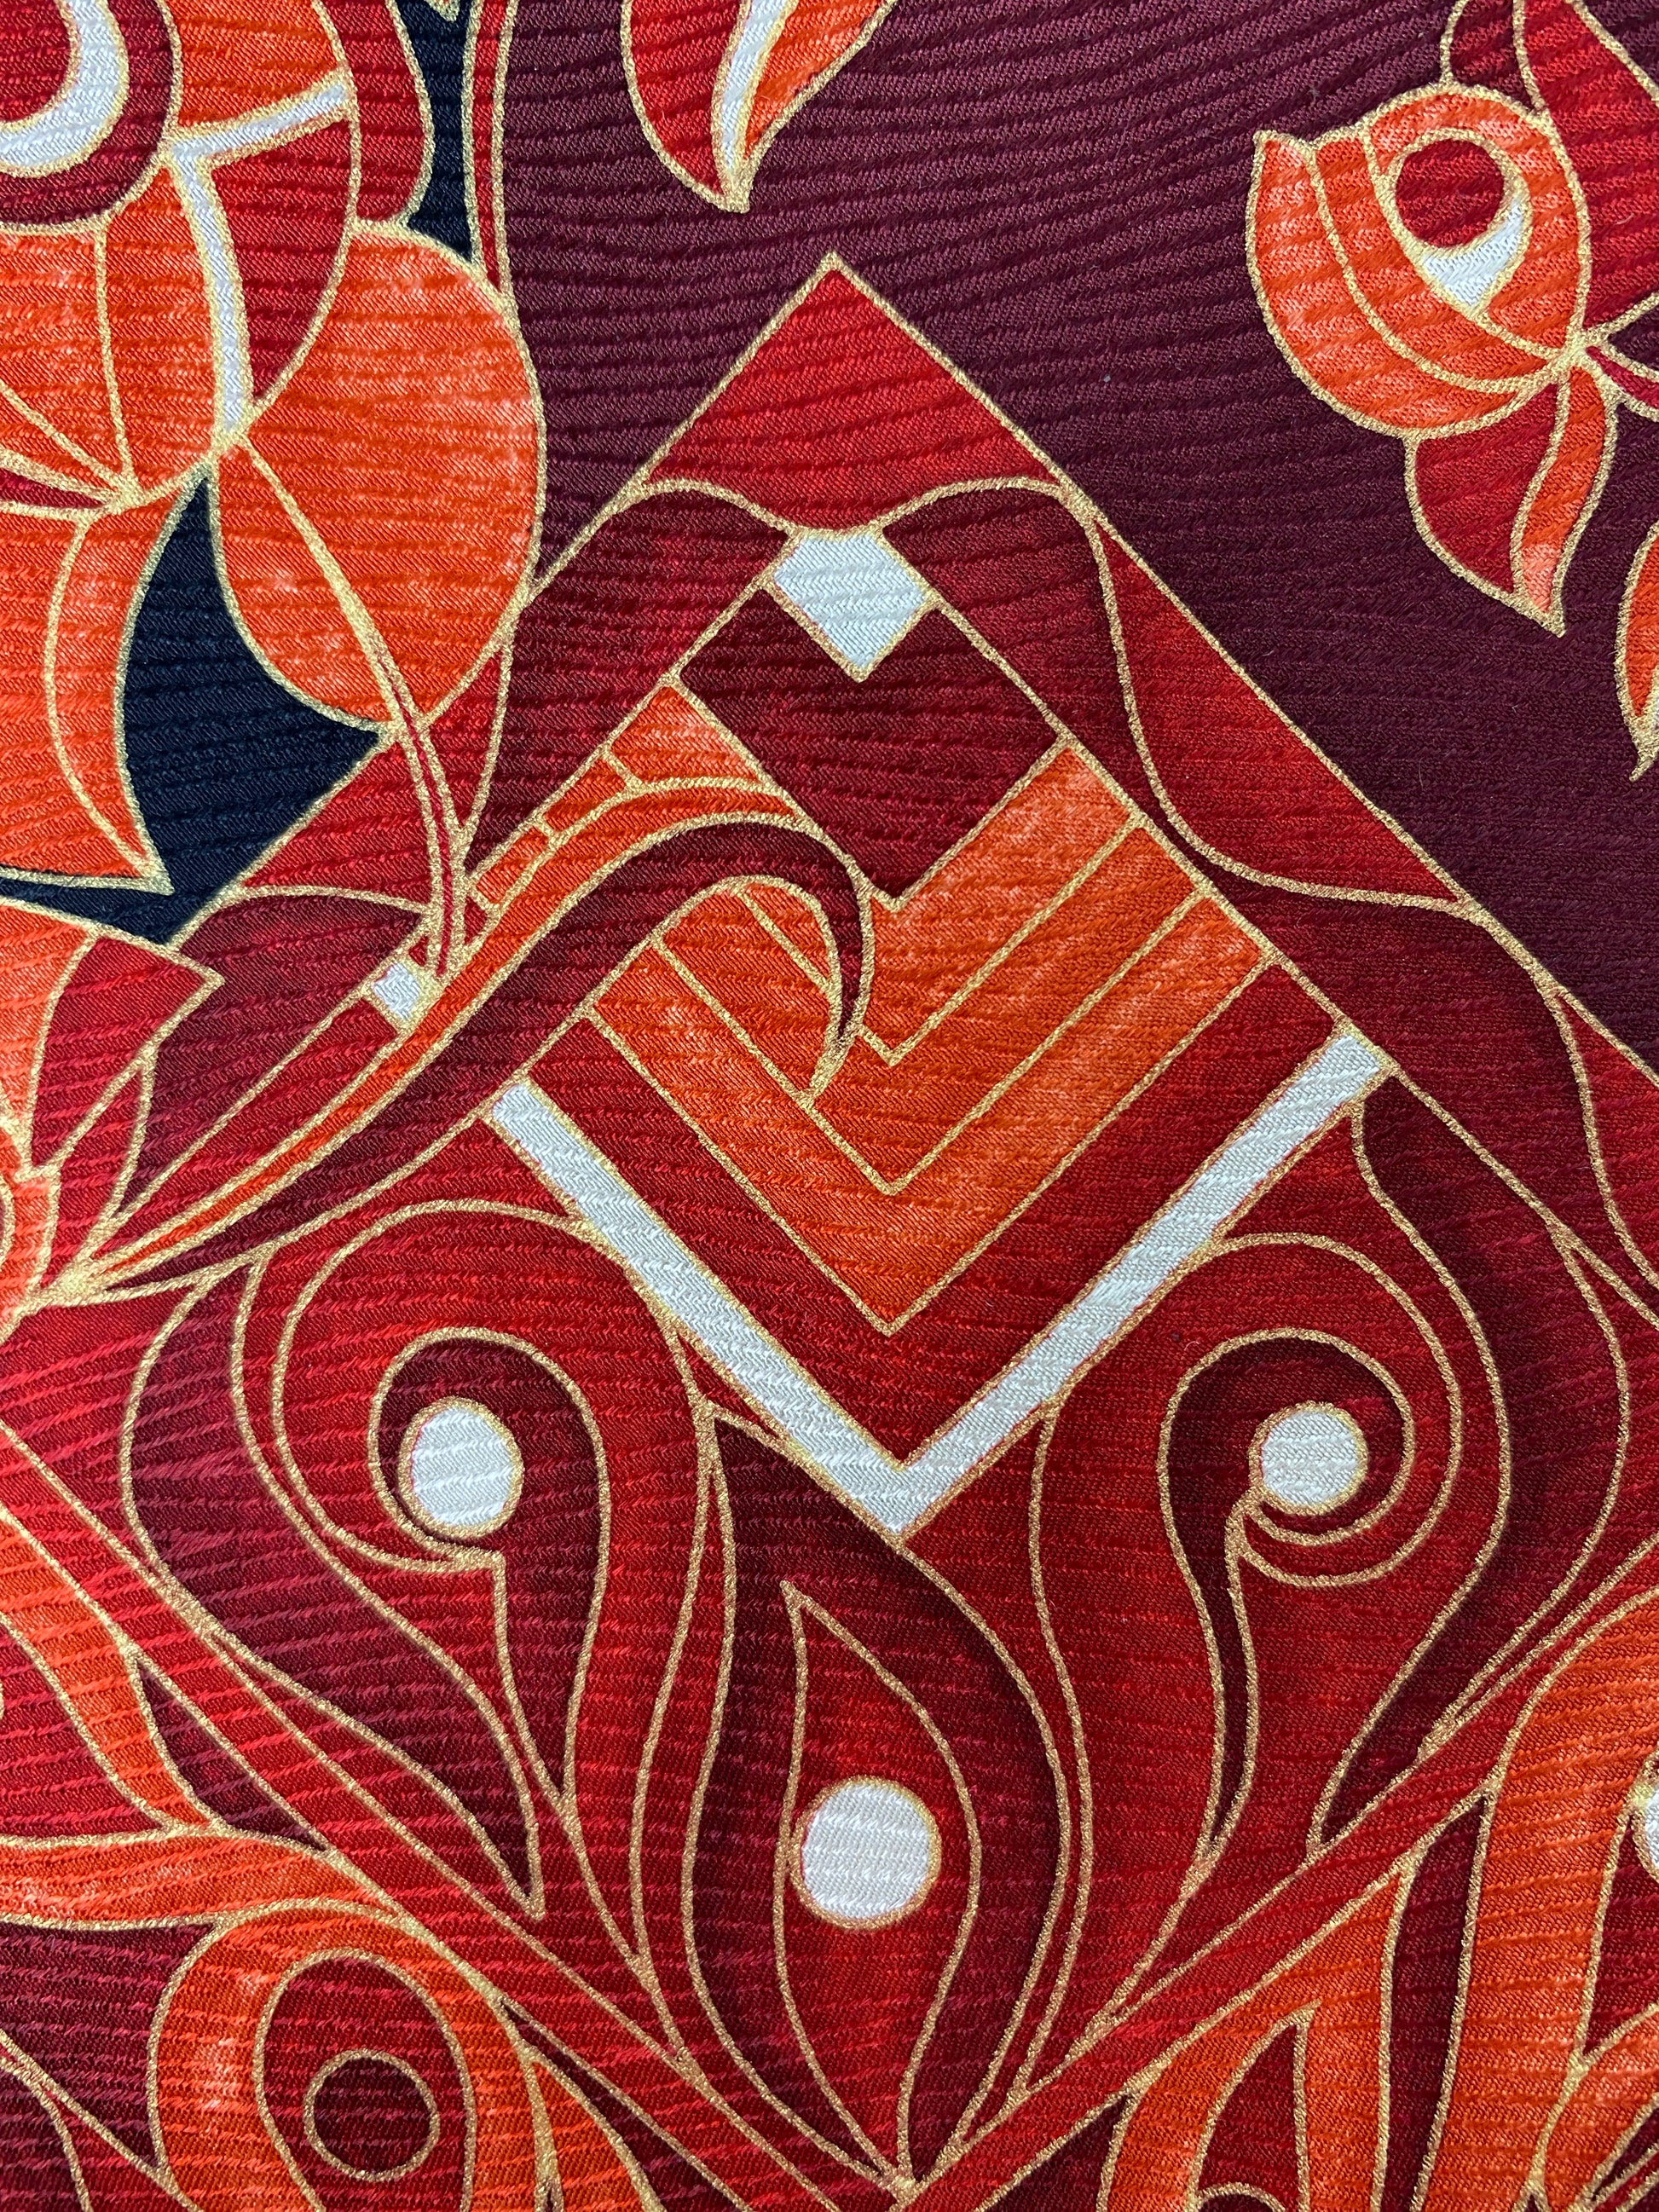 Close-up of: 90s Deadstock Silk Necktie, Men's Vintage Black/ Red/ Orange Oriental Paisley Print Tie, NOS